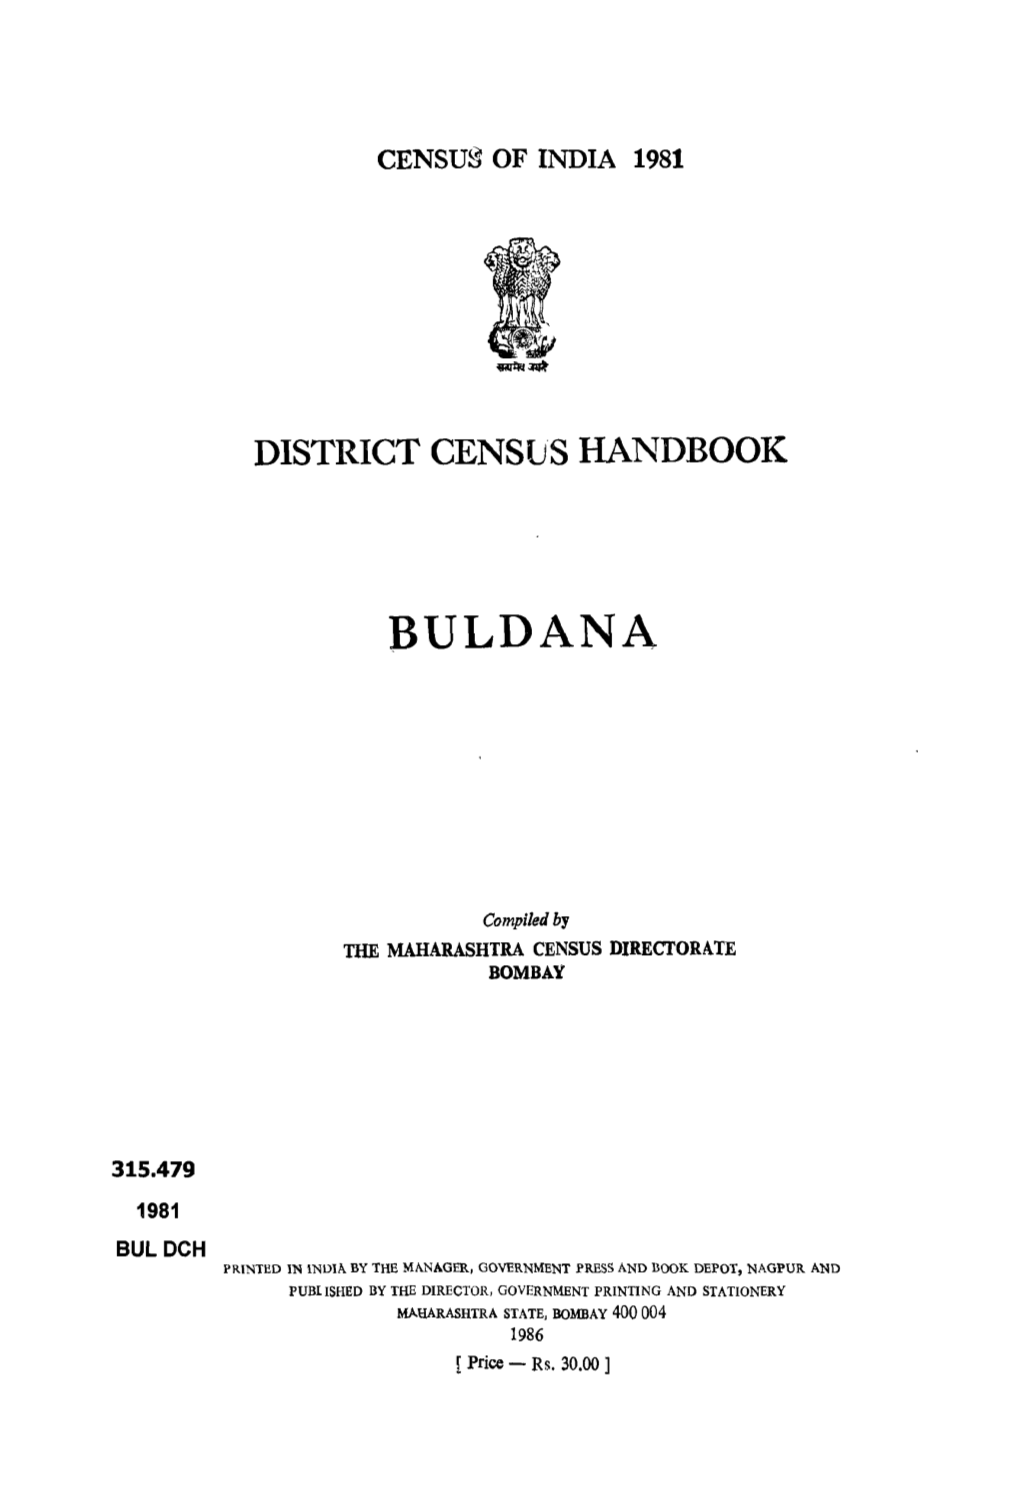 District Census Handbook, Buldana